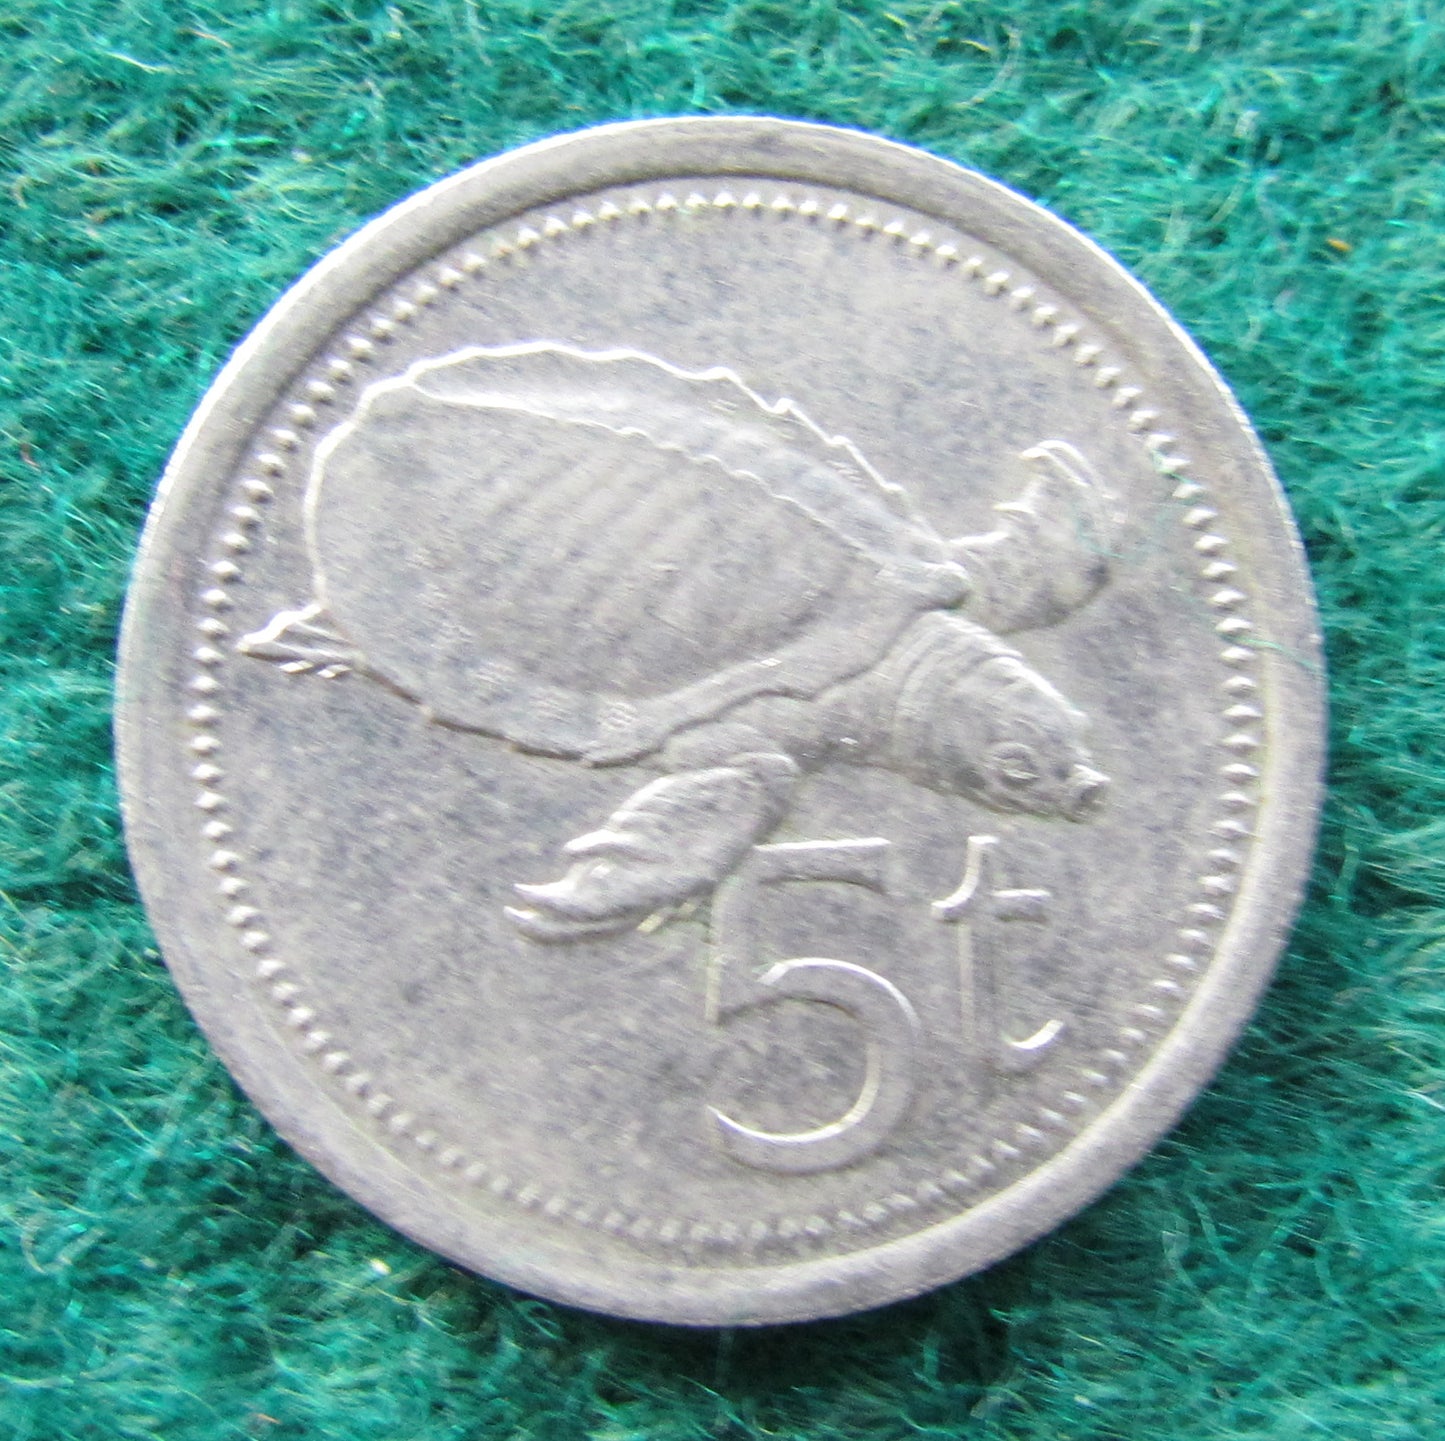 New Guinea 1979 5 Toea Coin - Circulated